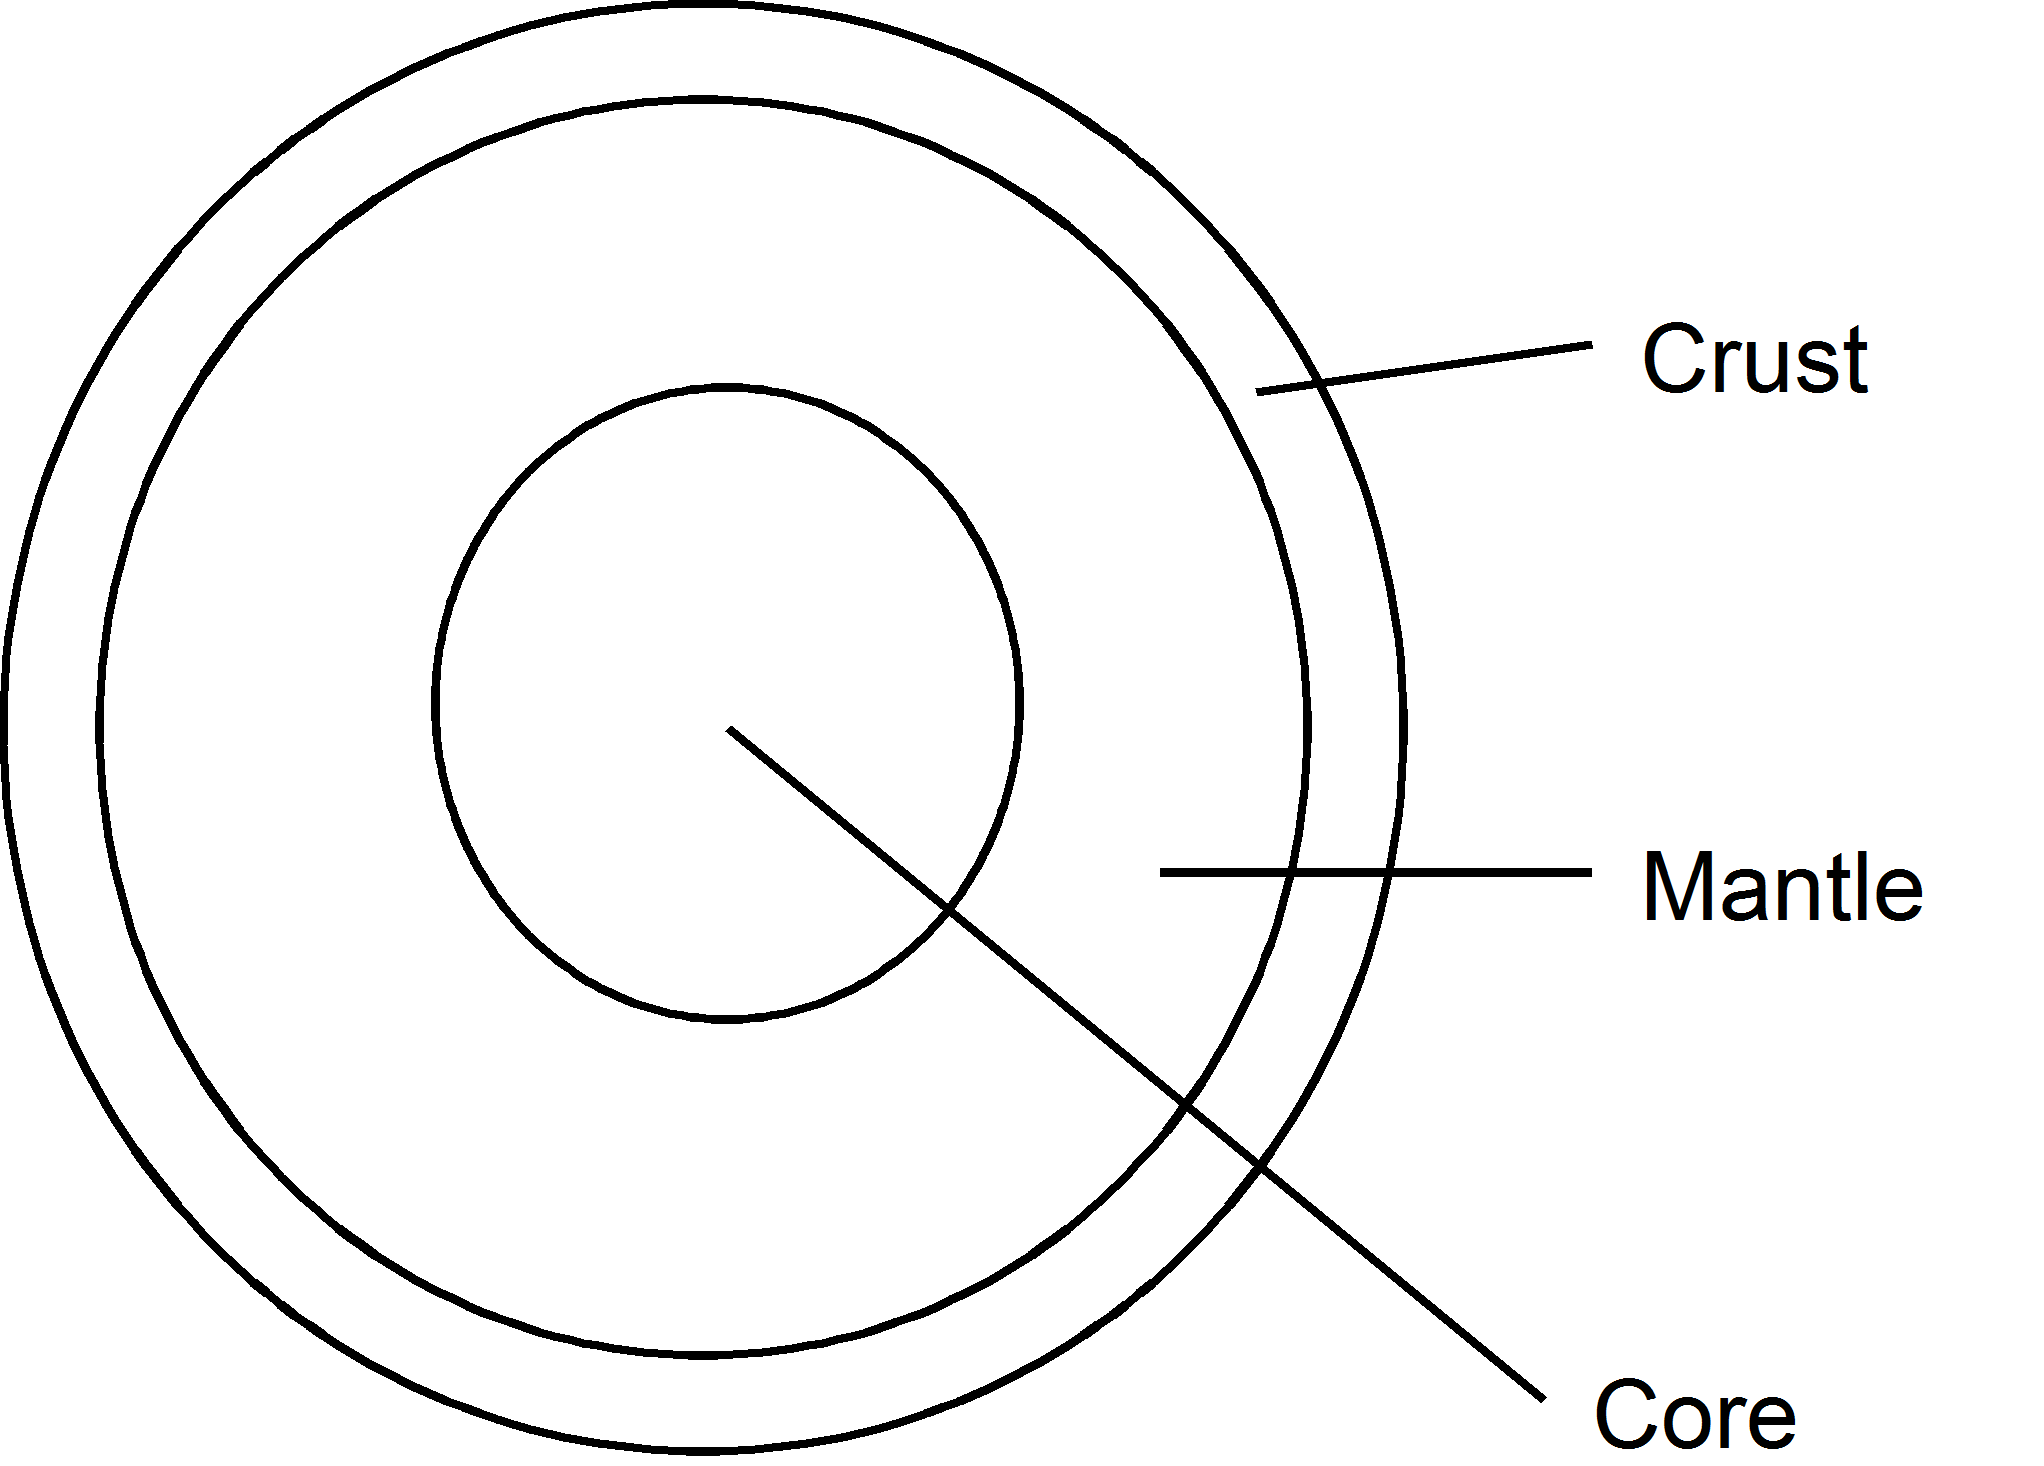 Crust mantle core